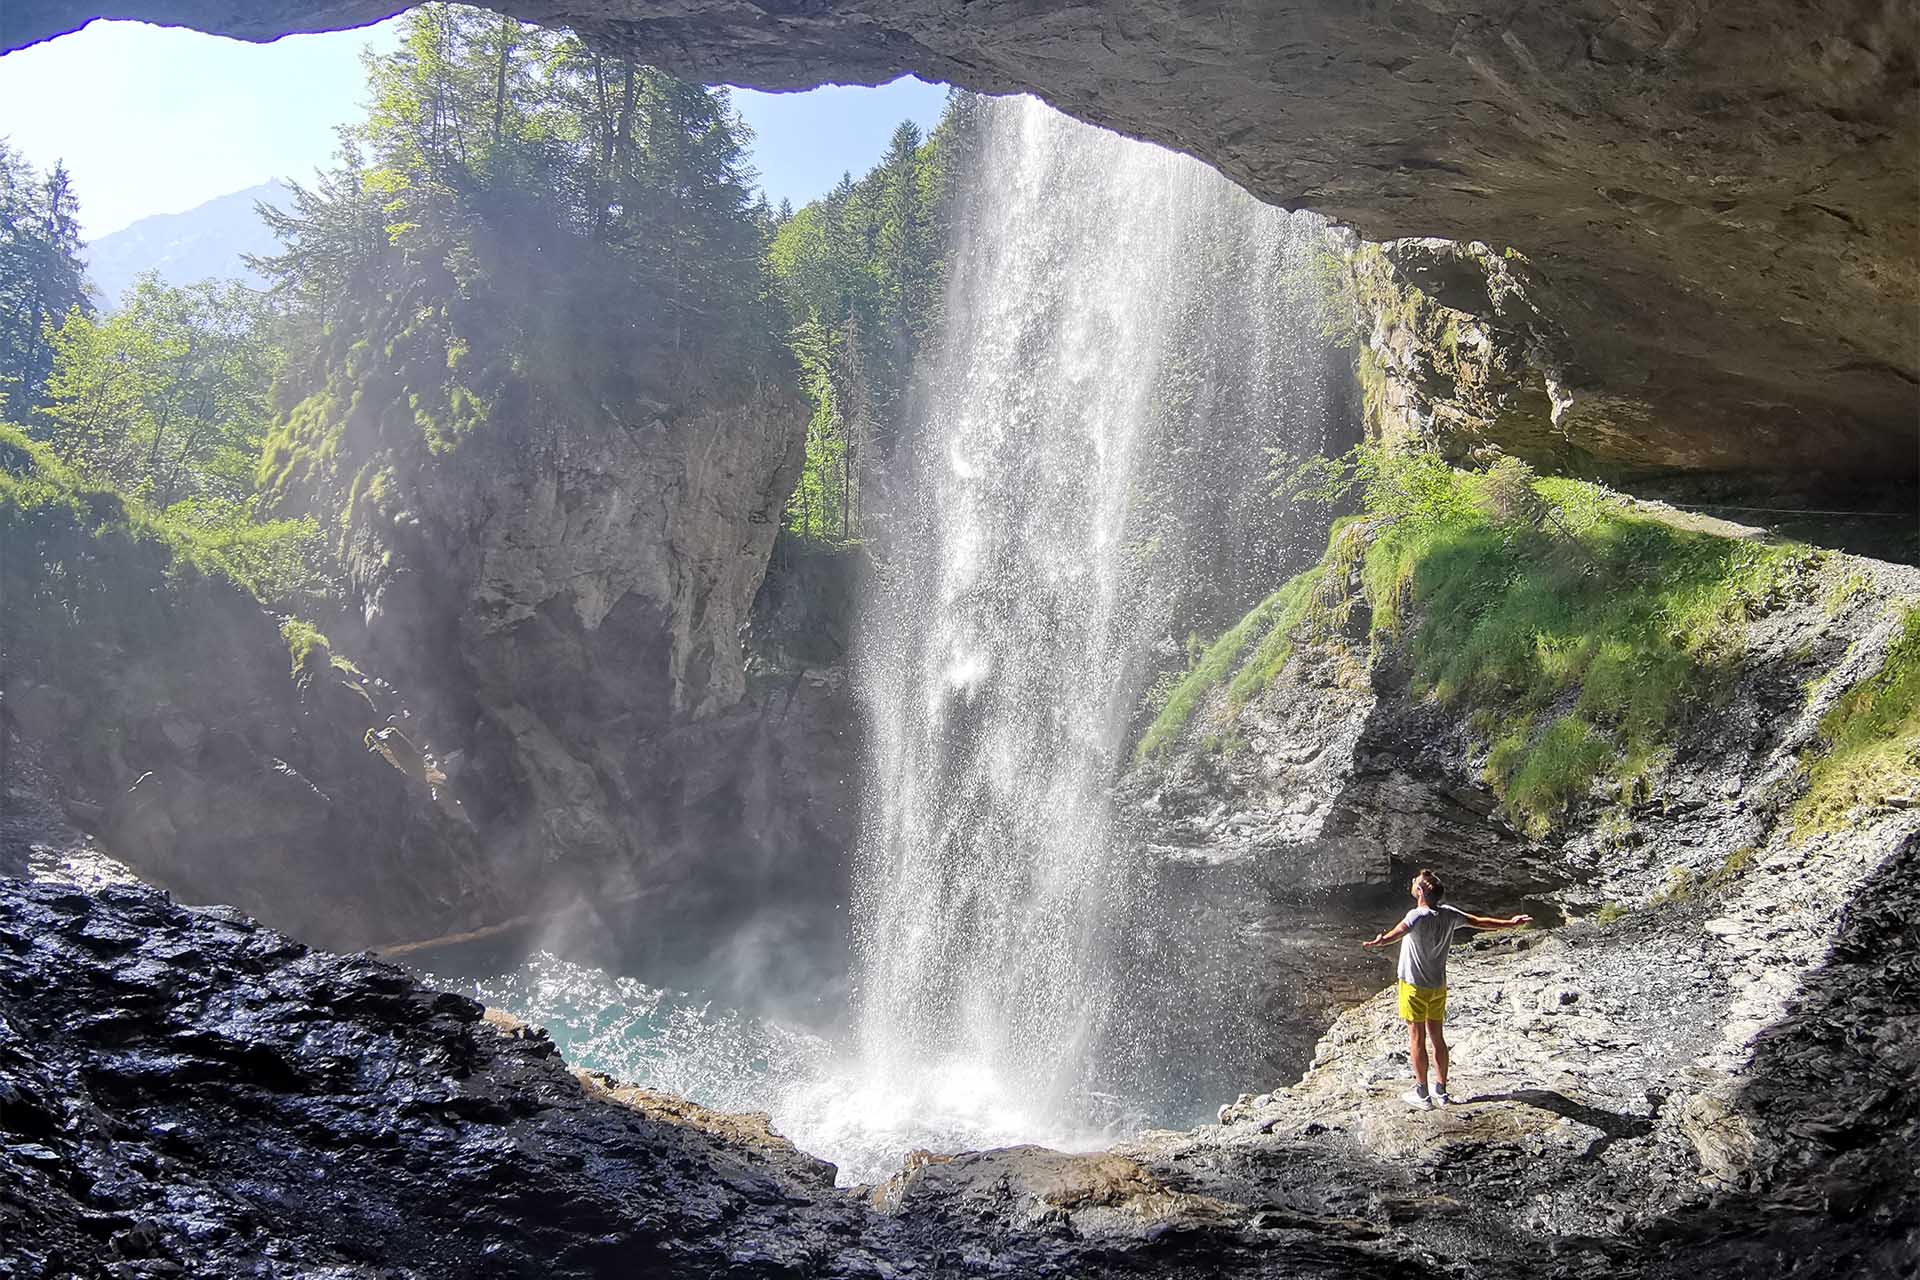 Berglistüber waterfall in Switzerland.